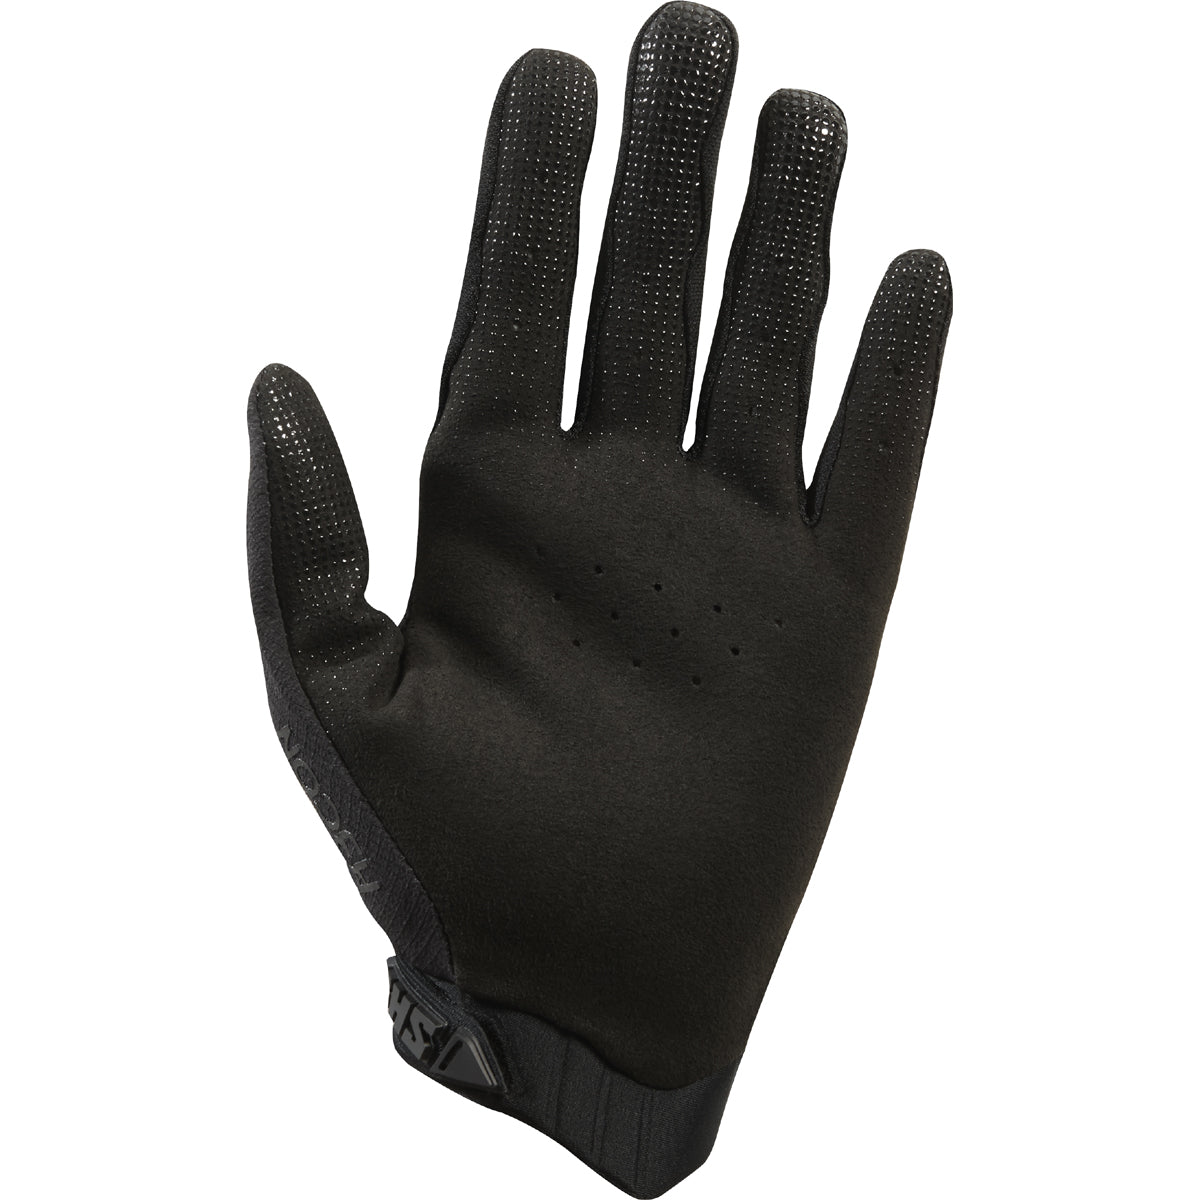 R3con Gloves Black